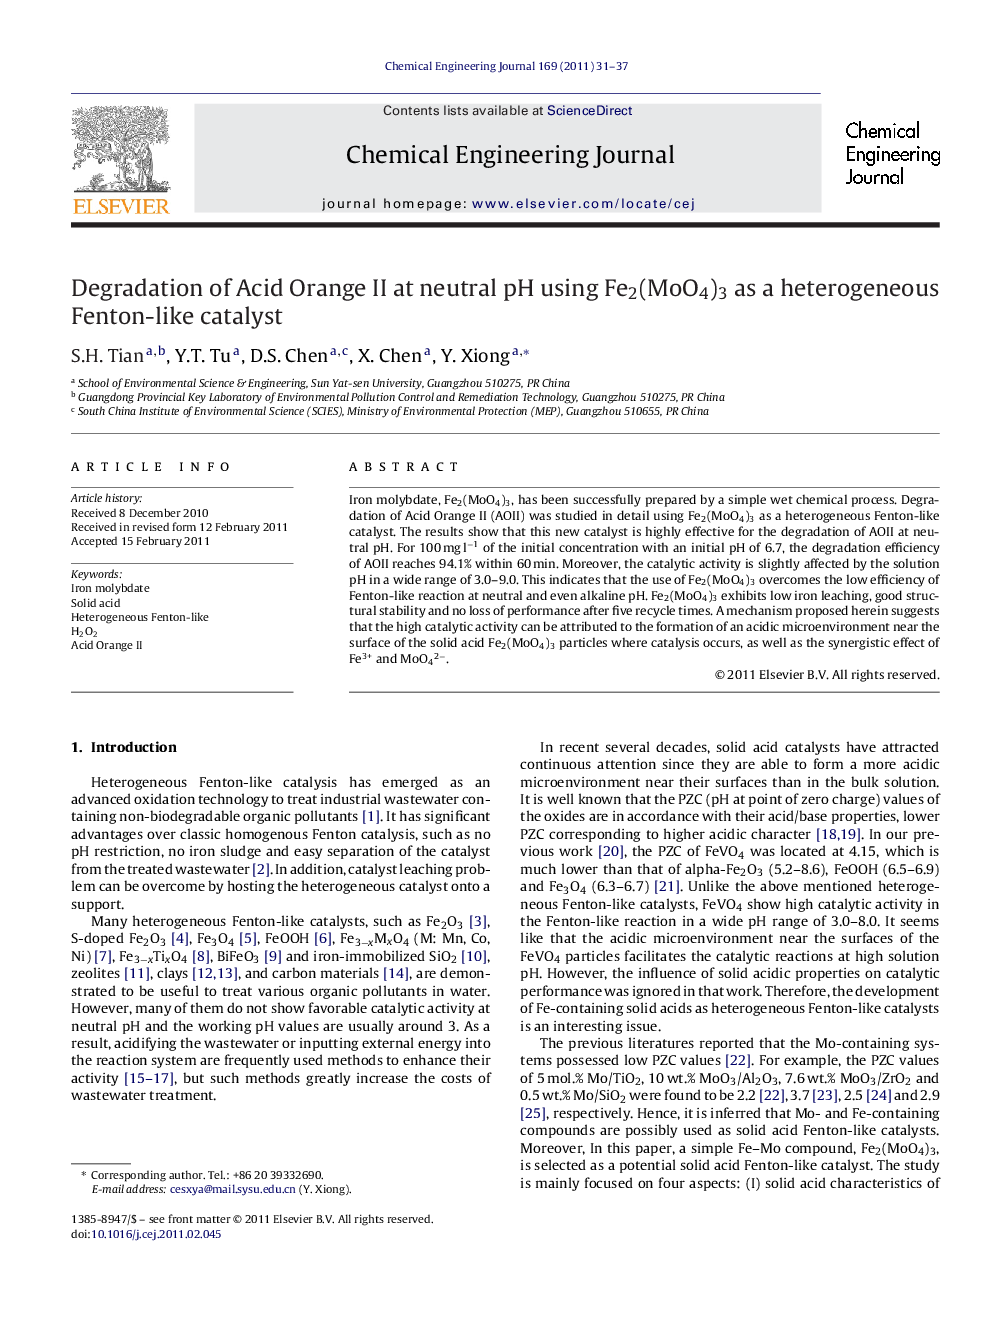 Degradation of Acid Orange II at neutral pH using Fe2(MoO4)3 as a heterogeneous Fenton-like catalyst